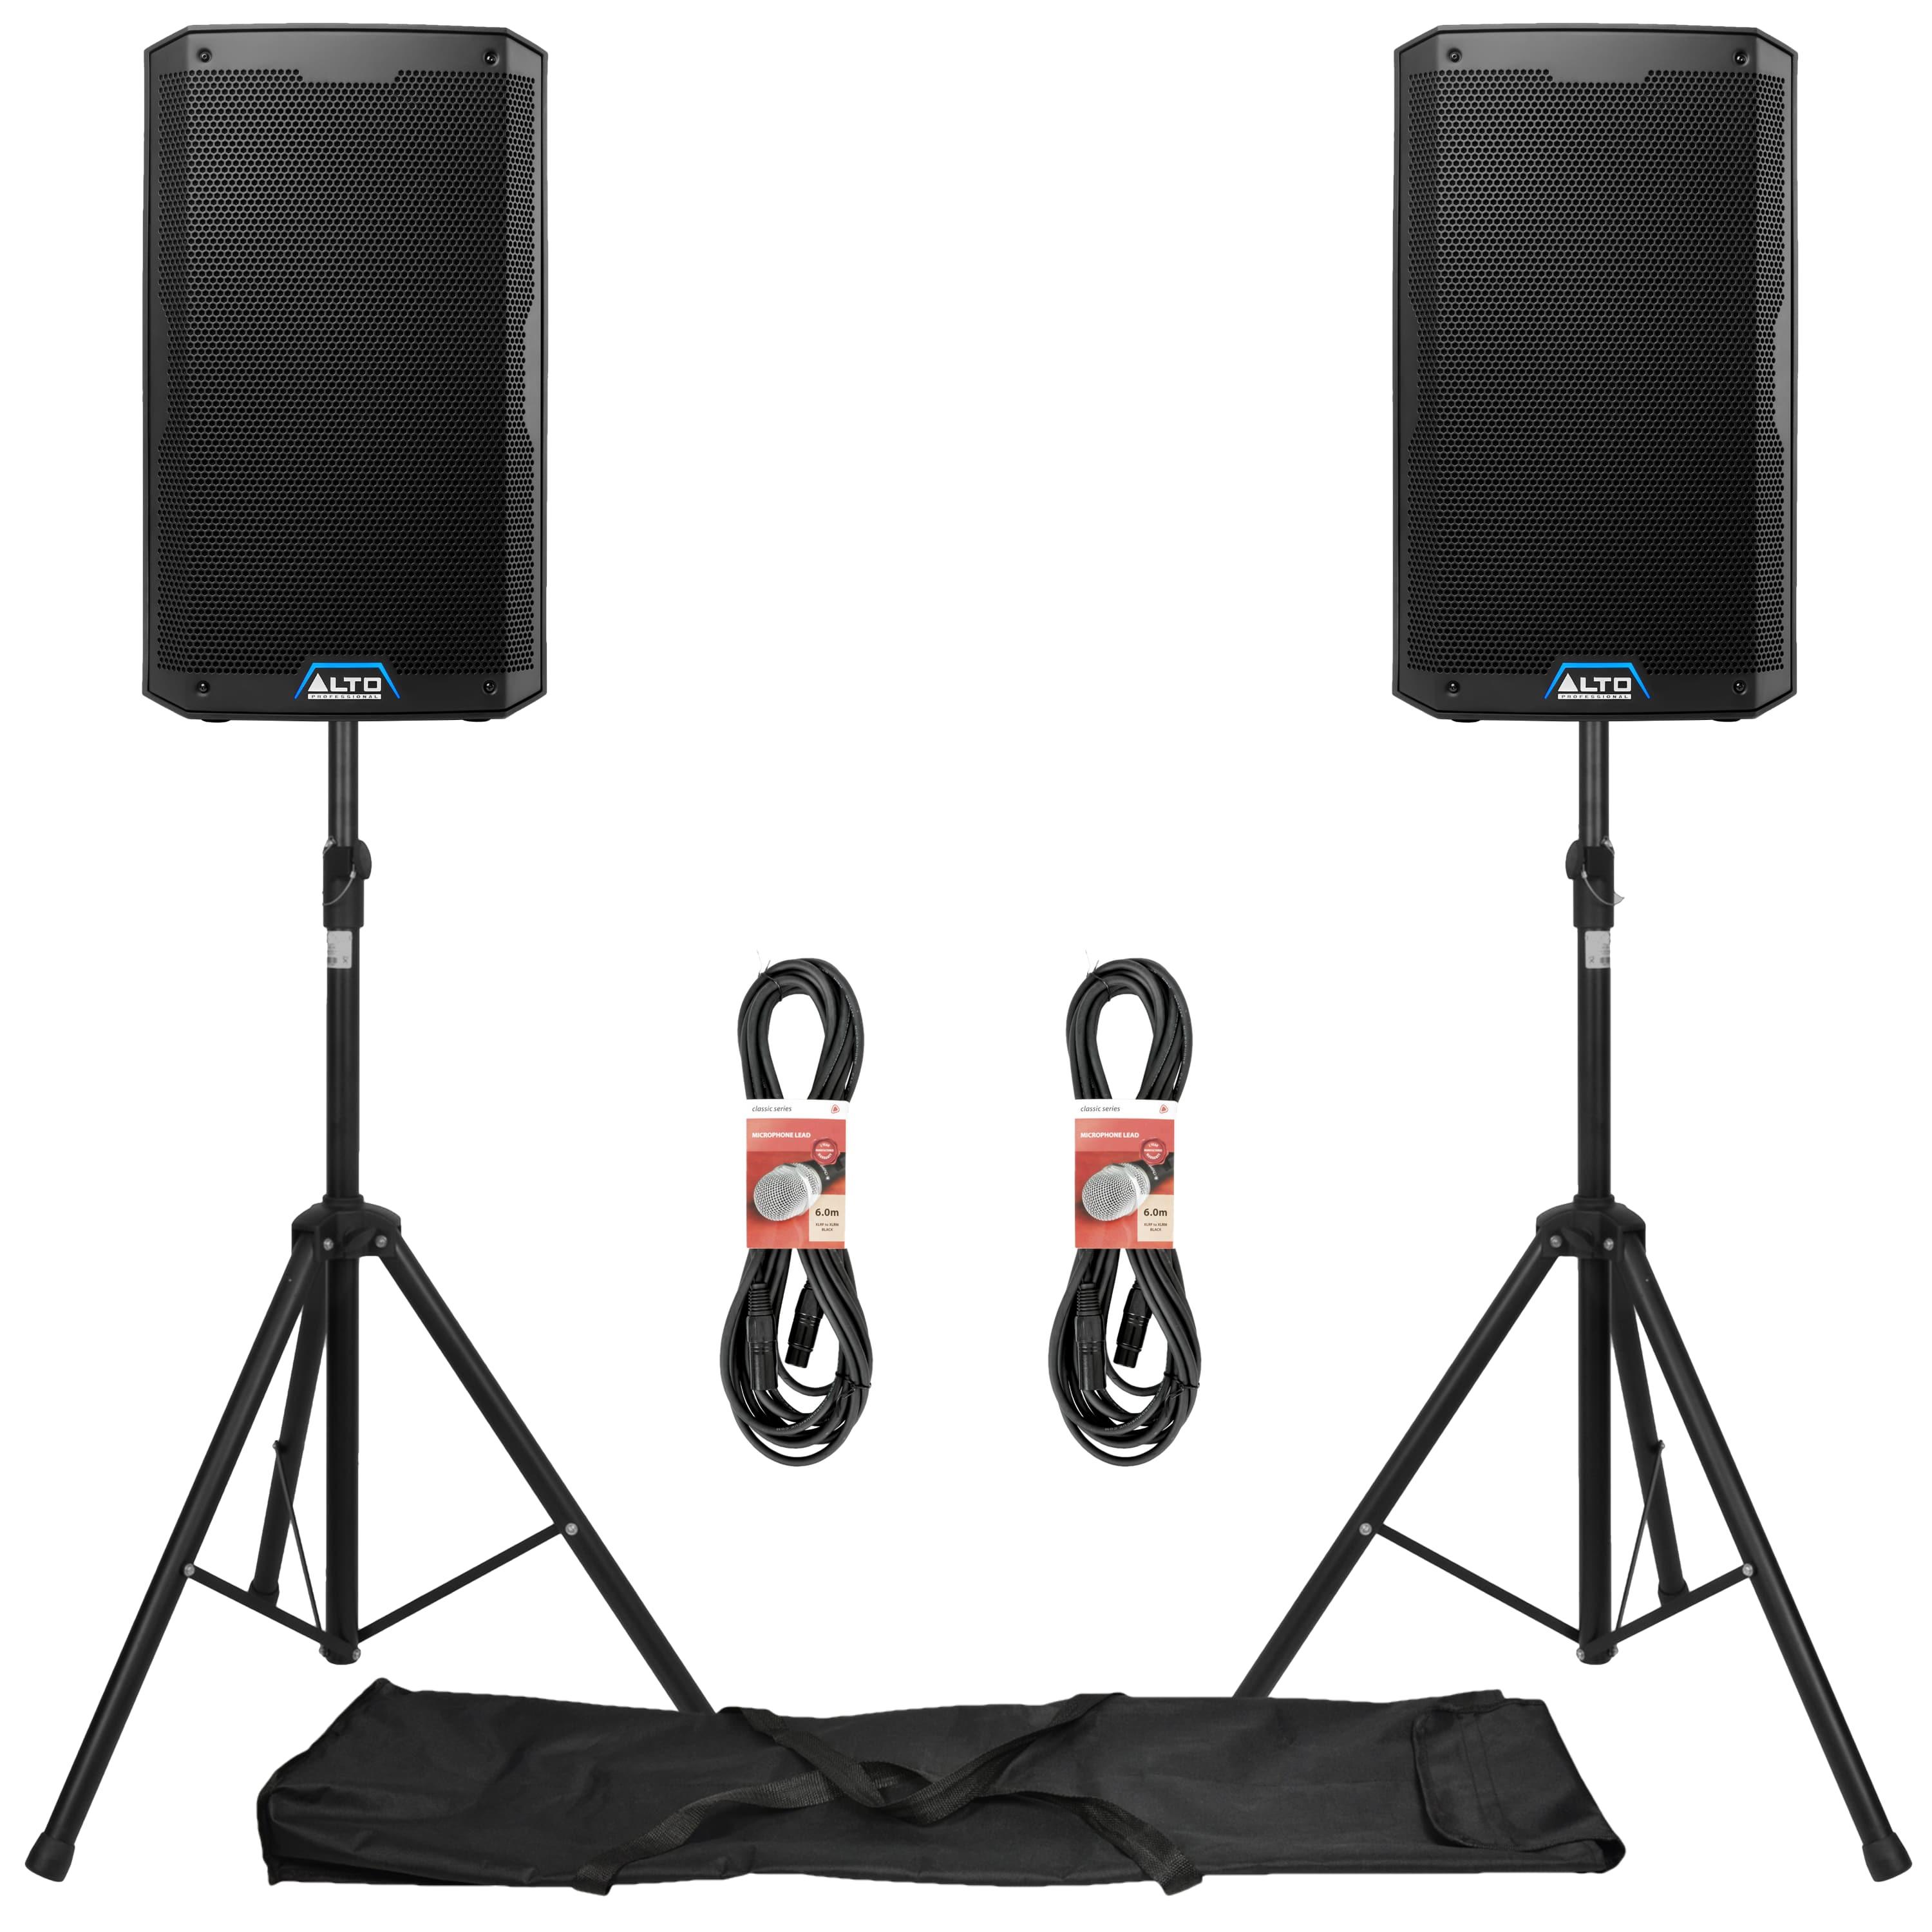 Alto Professional TS410 Speaker package